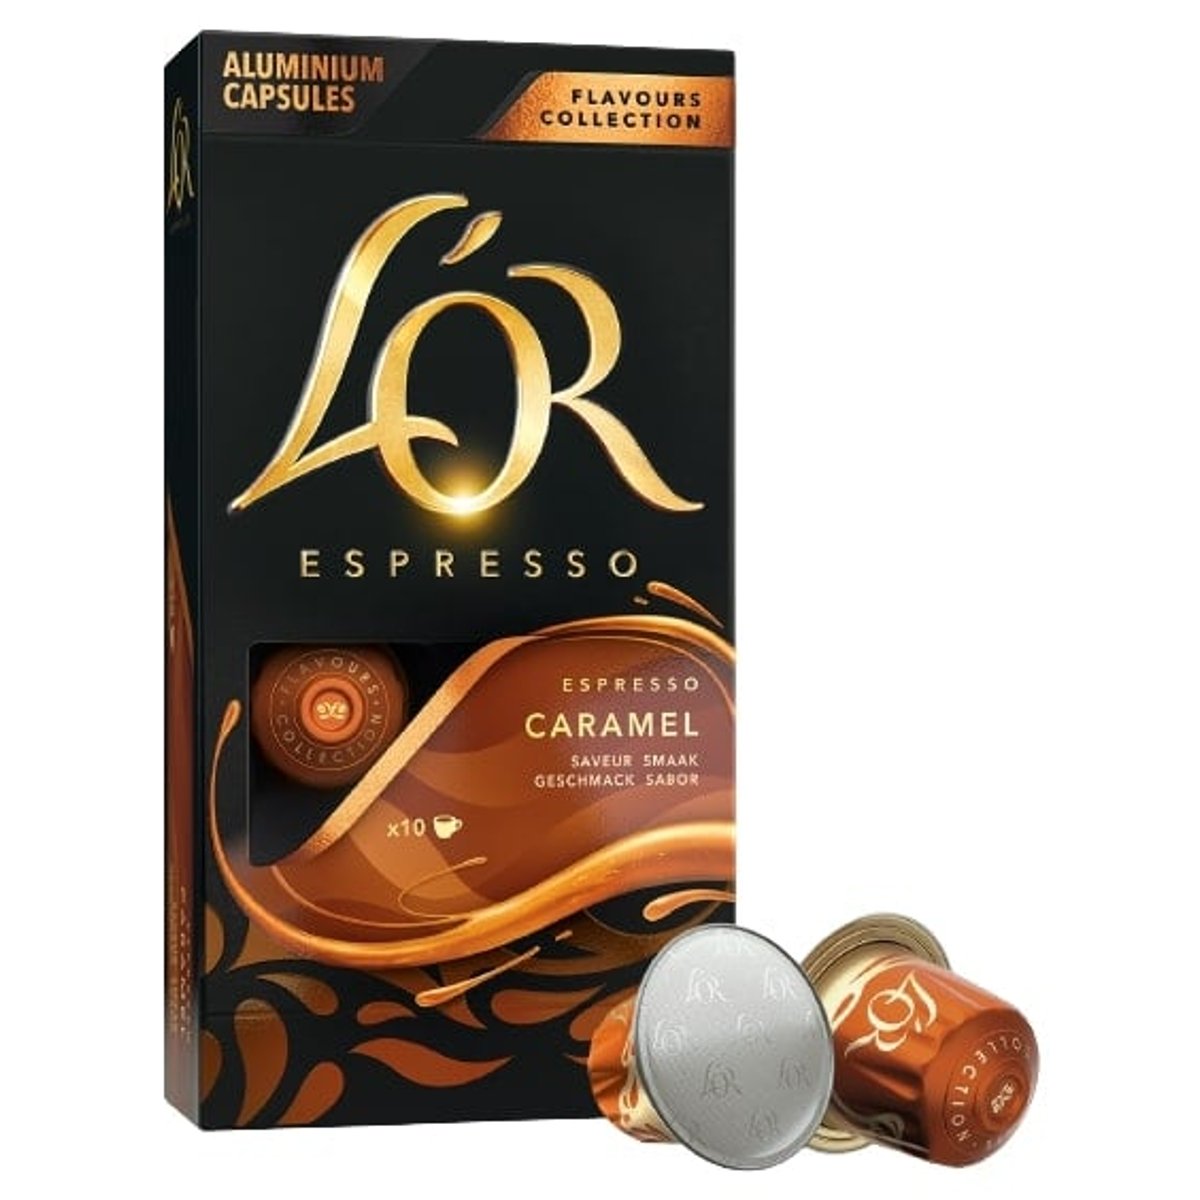 L'OR Espresso Caramel kapsle